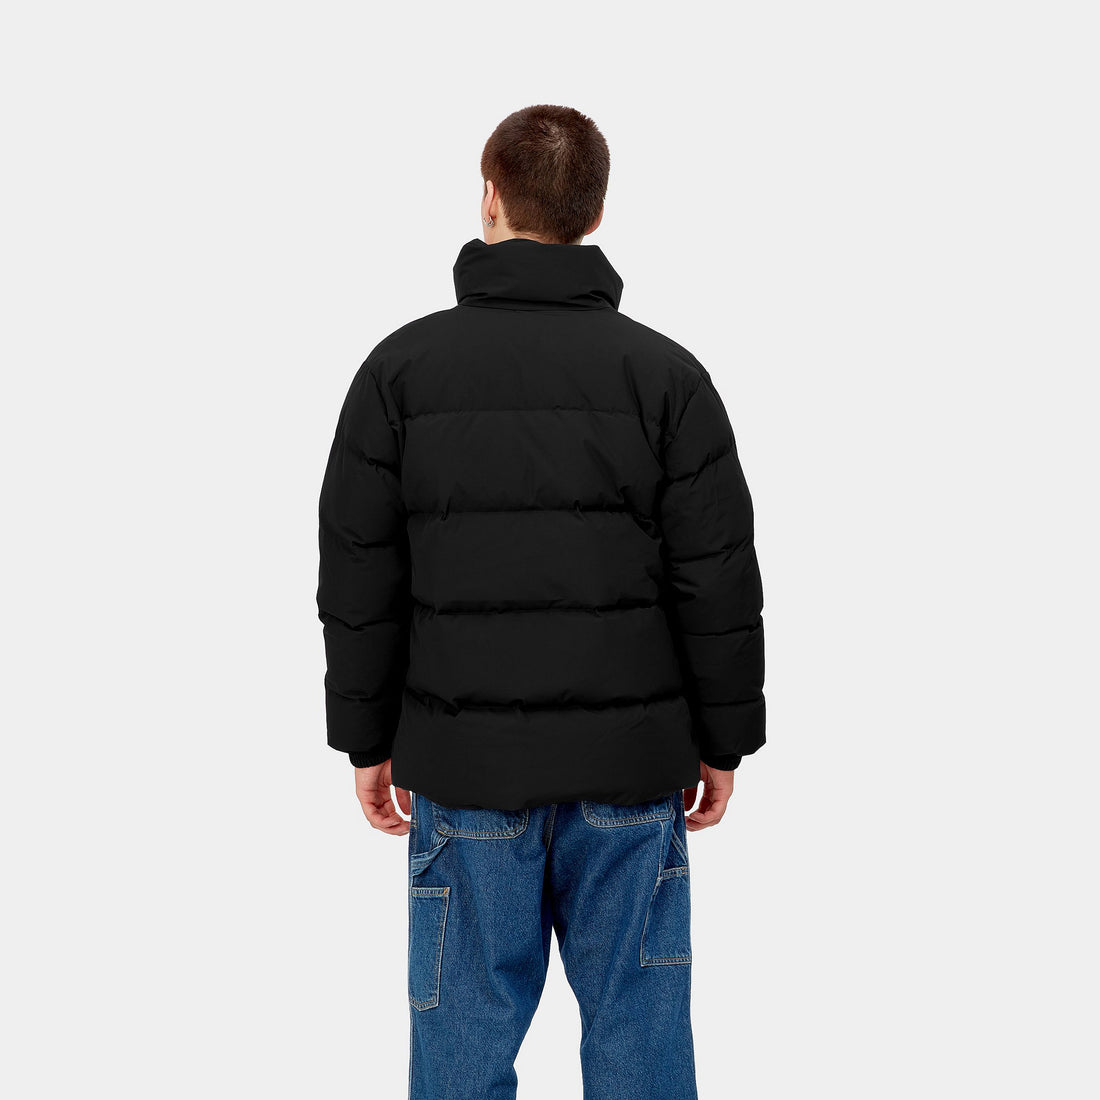 Carhartt WIP Danville Jacket (black/white) - Blue Mountain Store